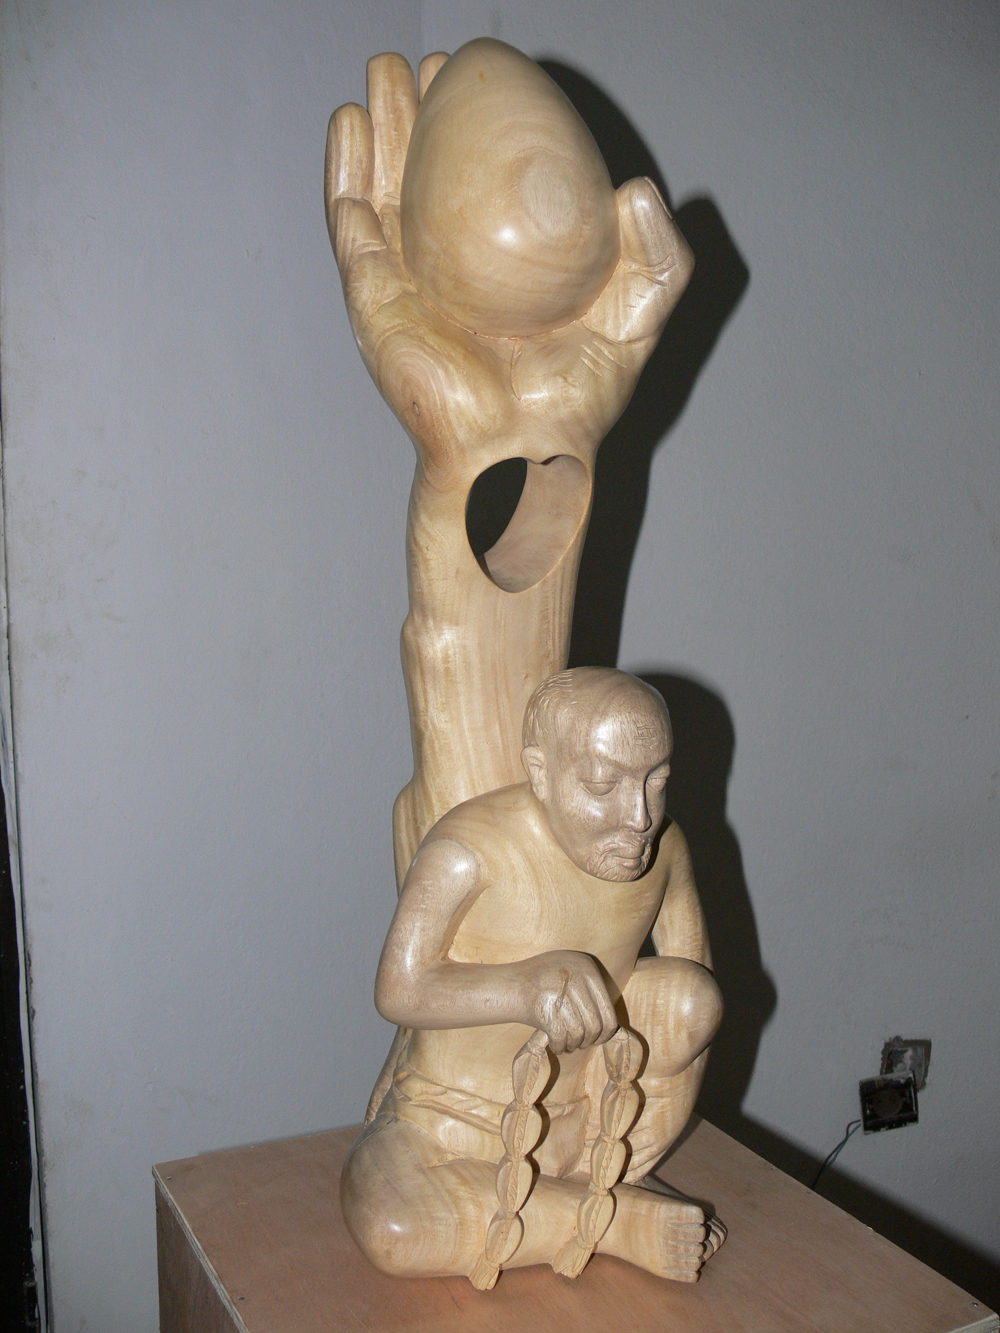 2015 WWD, regional event, Benin, wood sculpture competition, exhibition